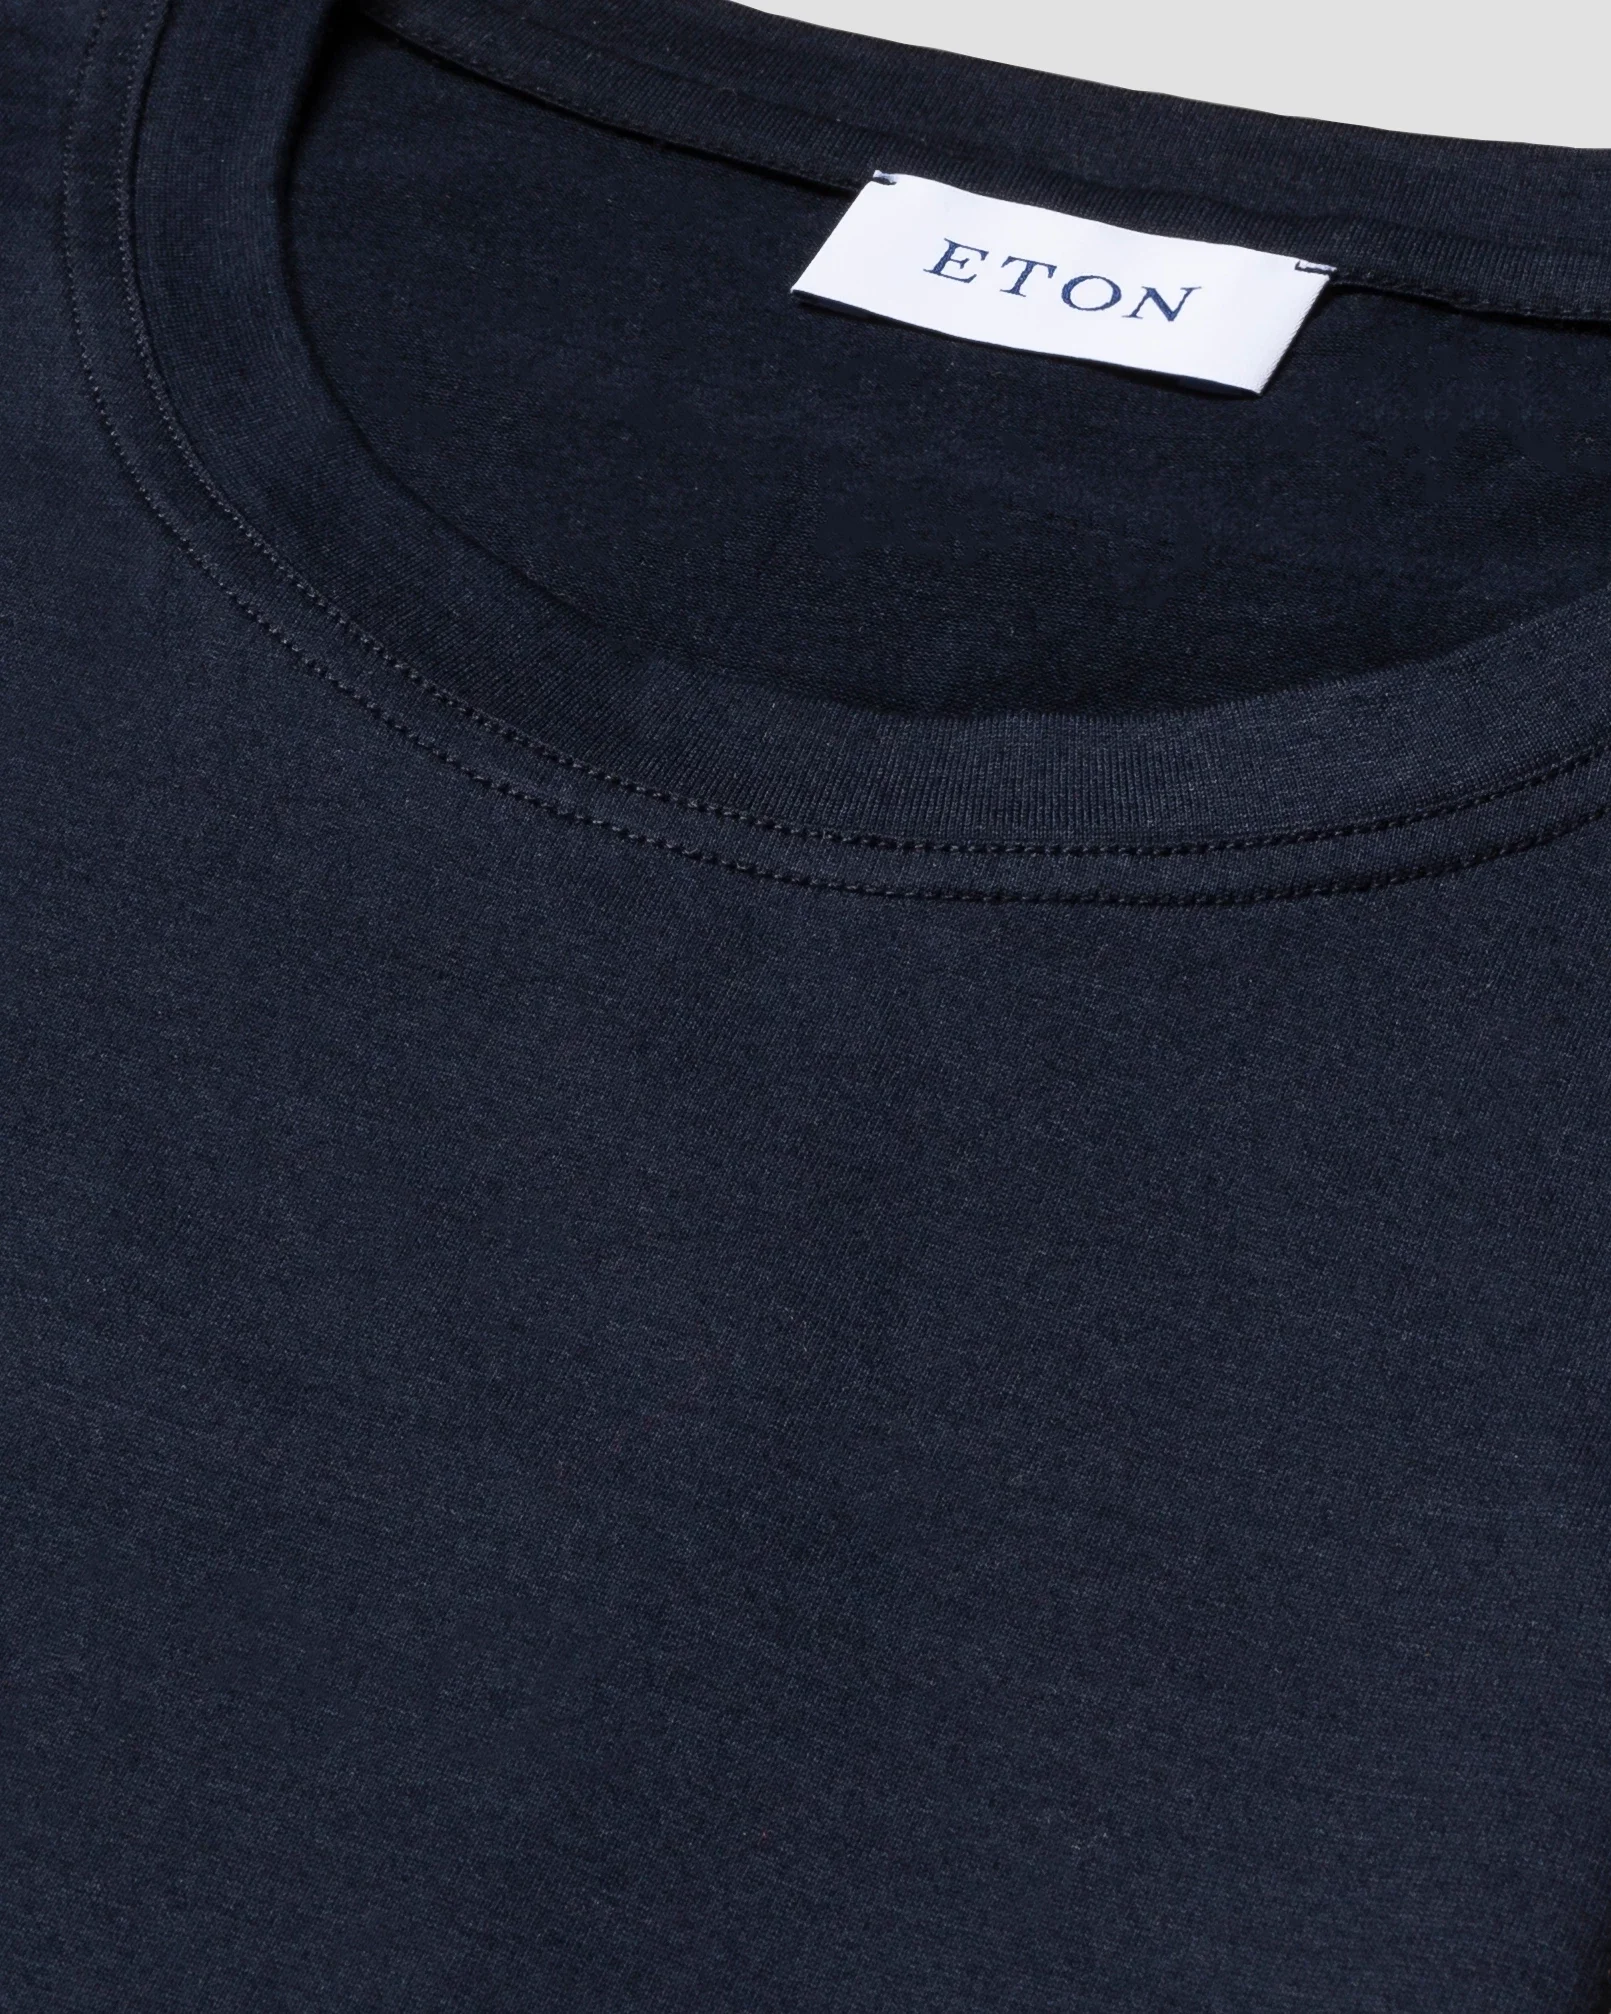 Eton - dark navy filo di scozia cotton t shirt